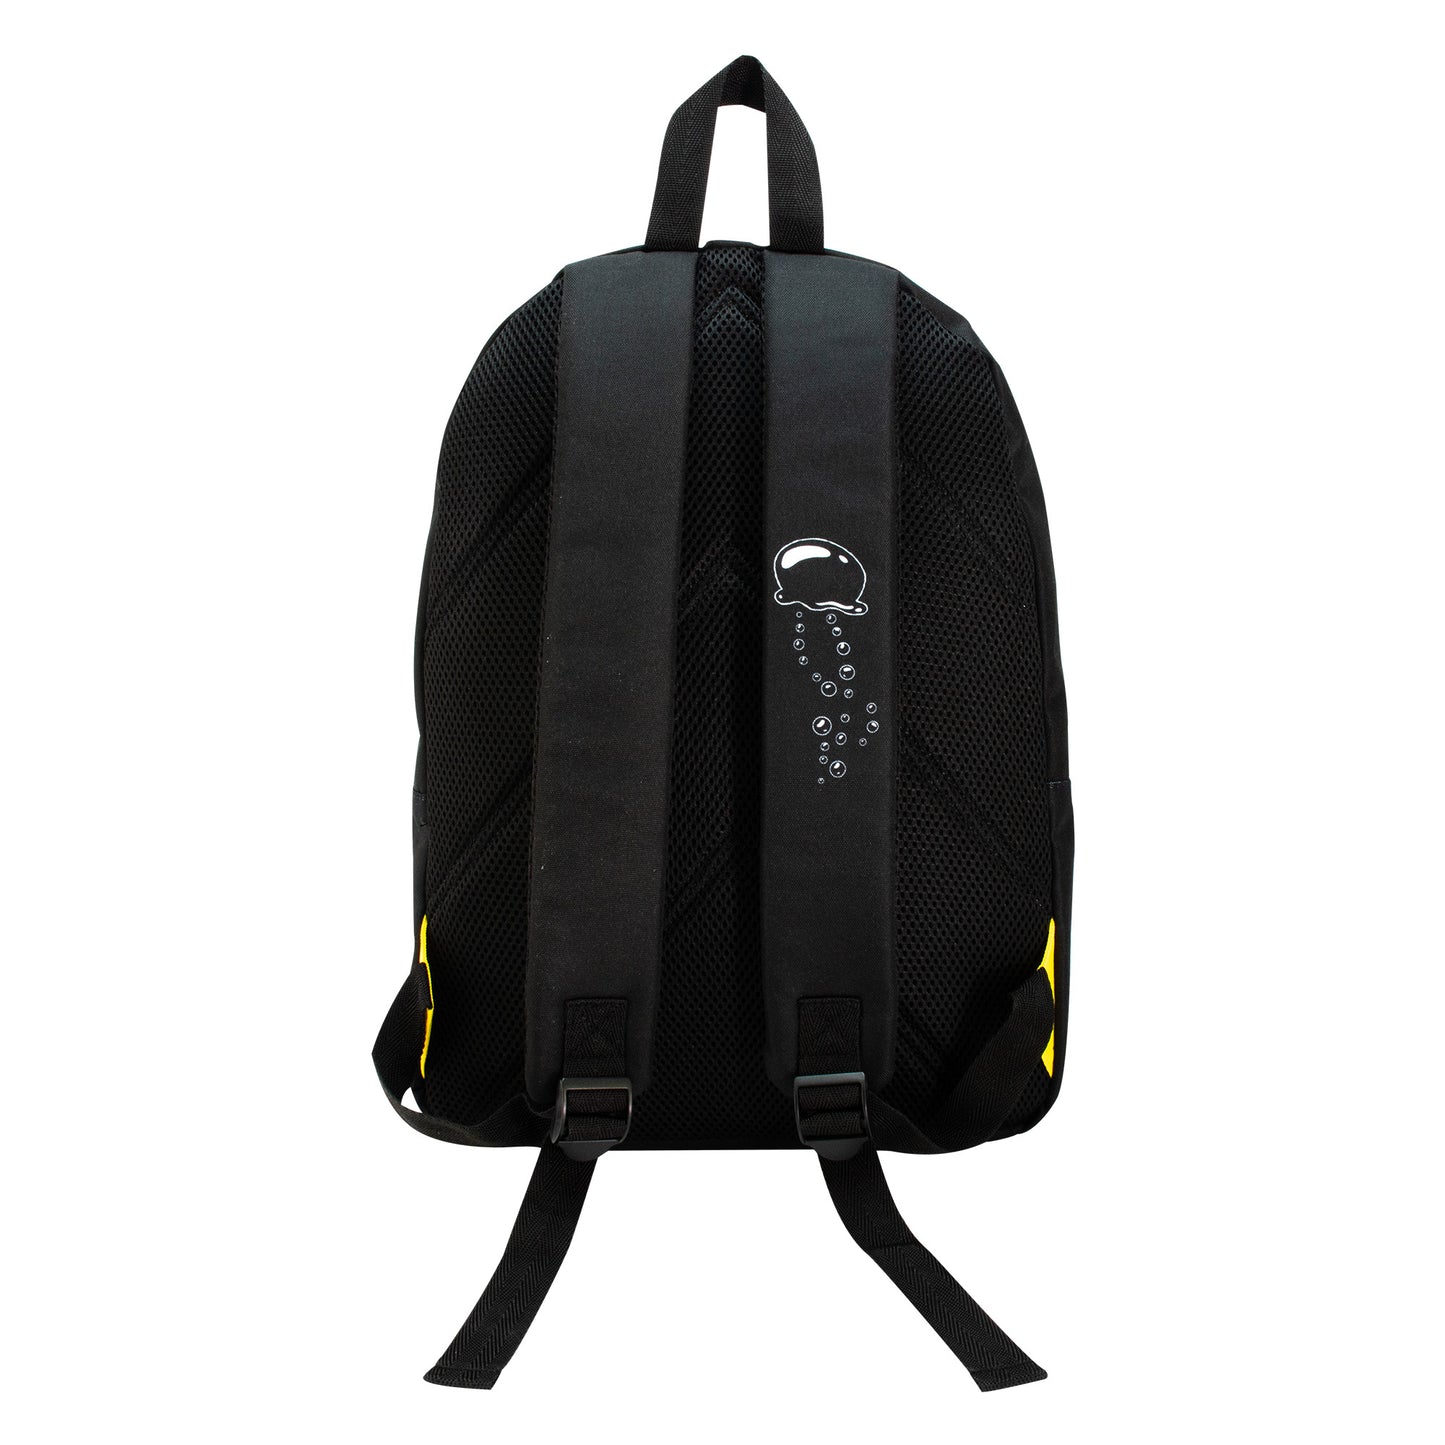 SpongeBob Premium Backpack